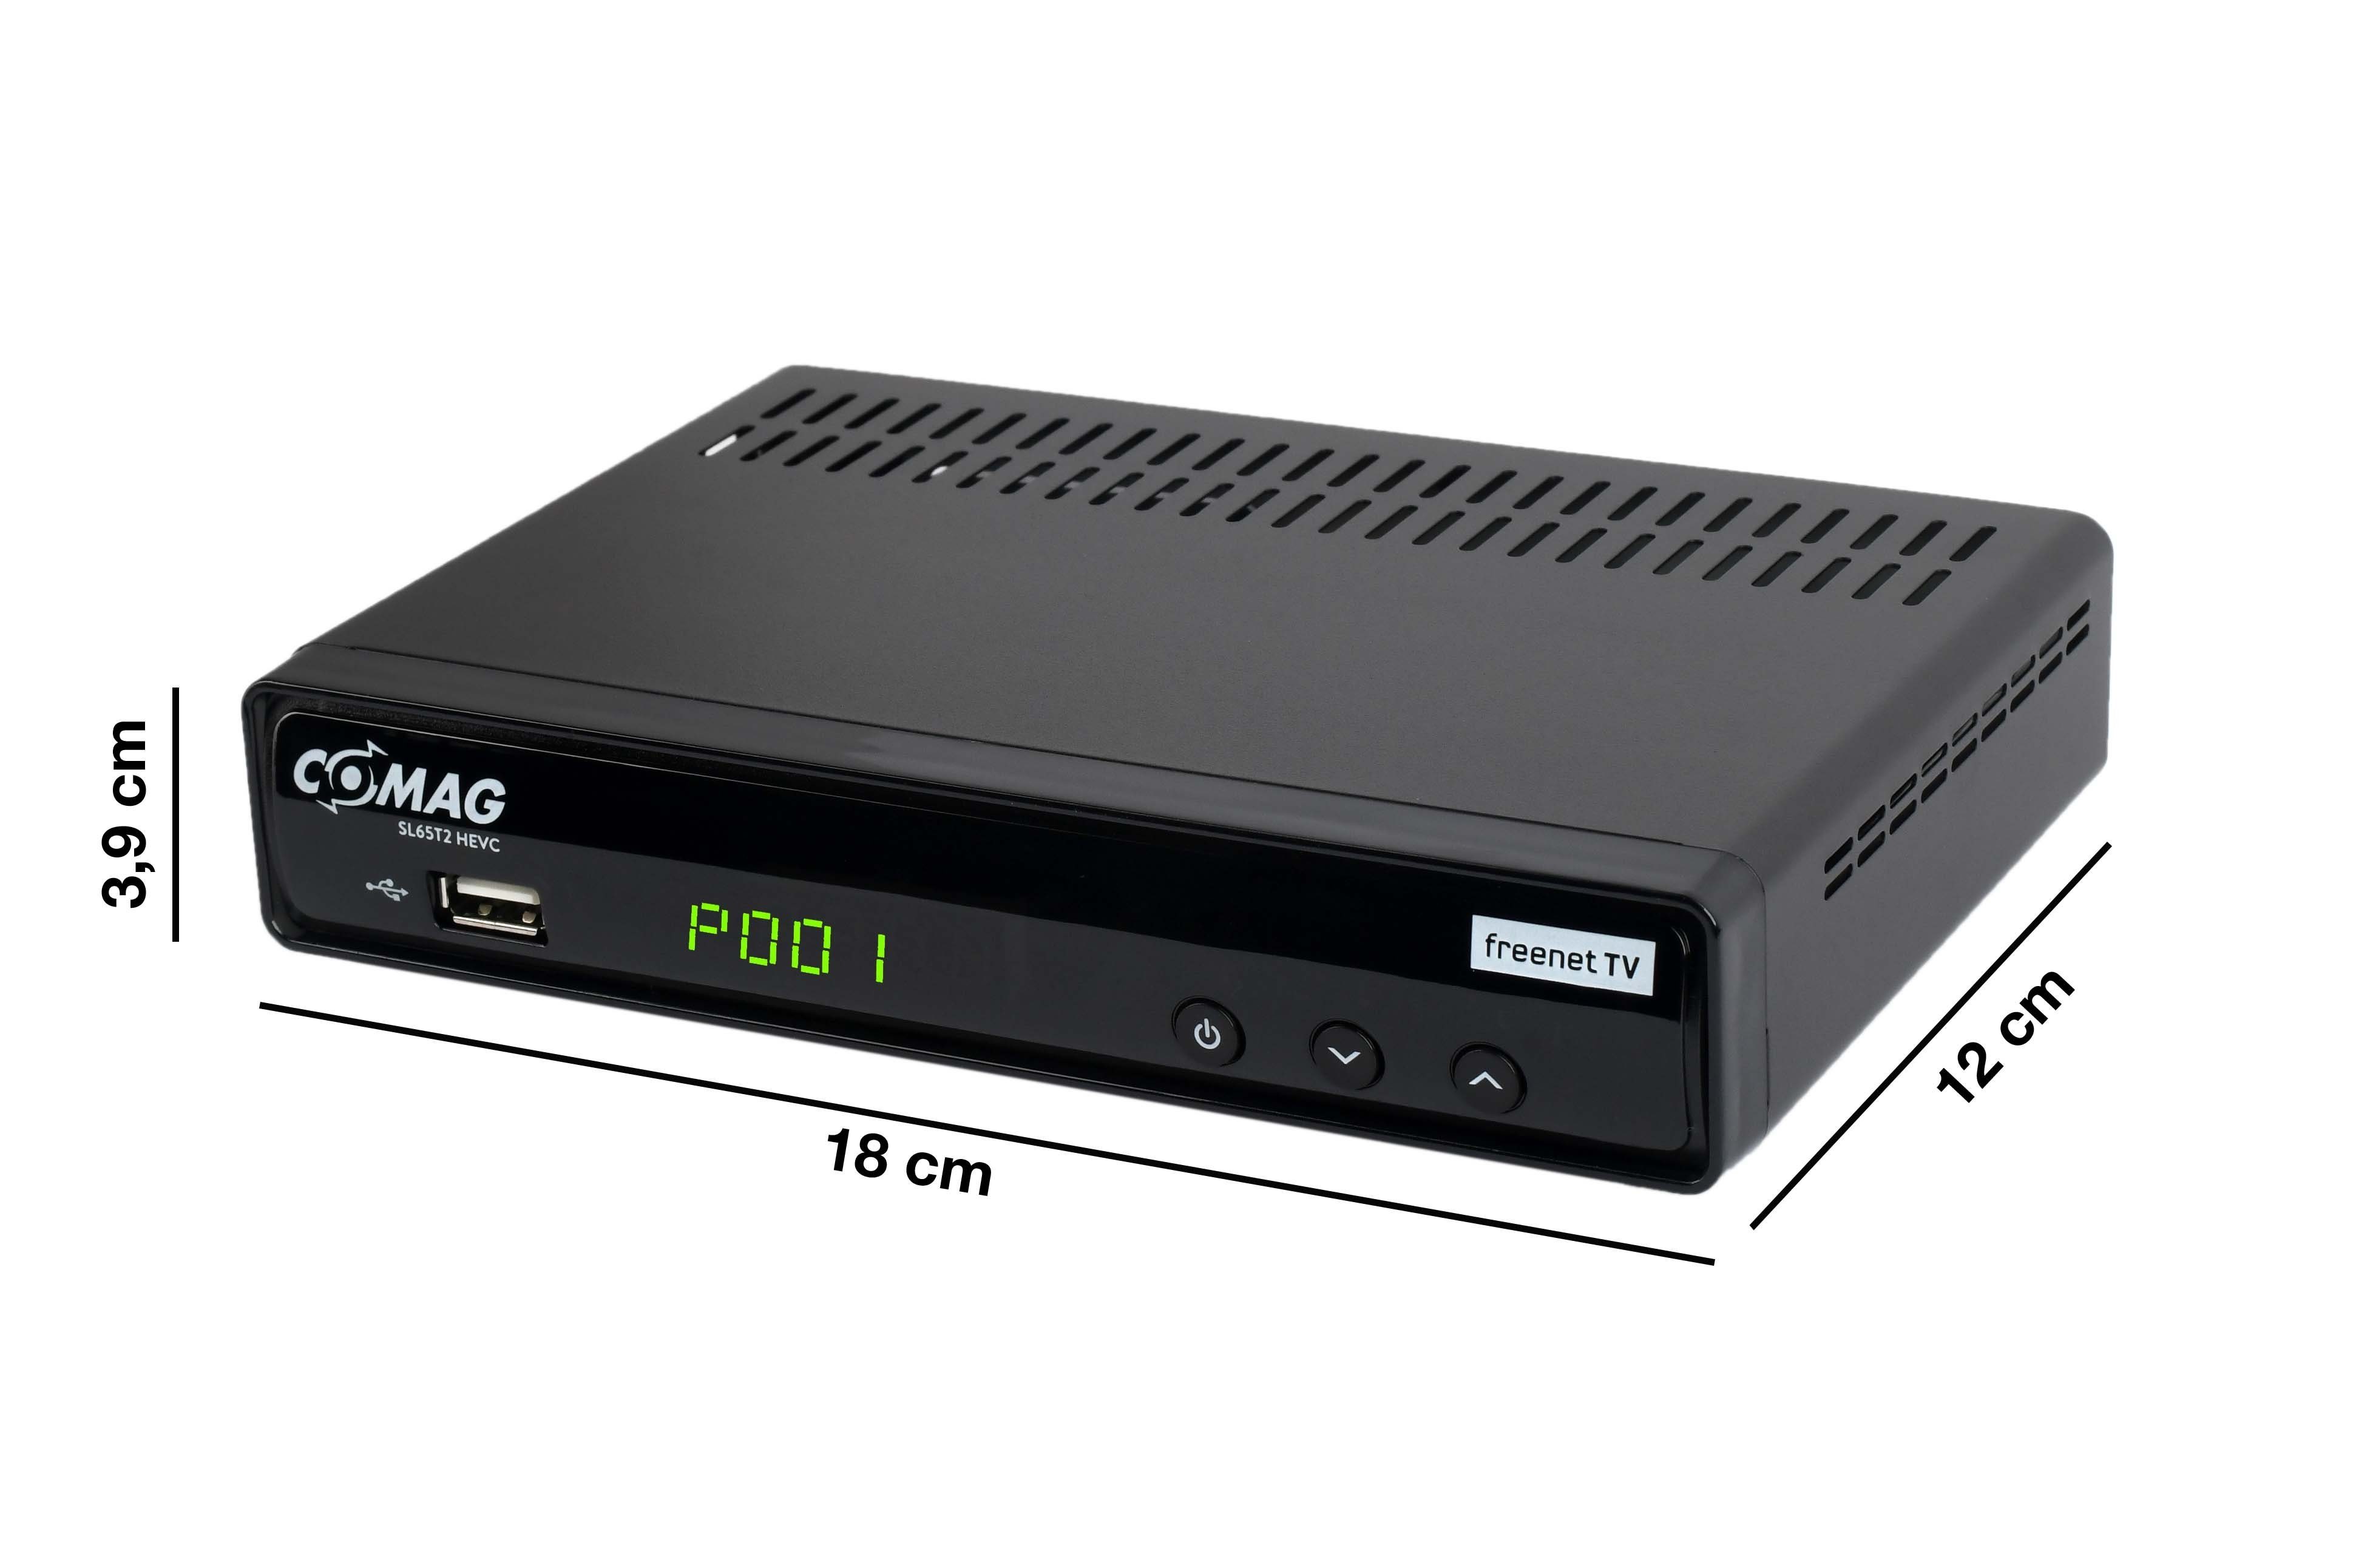 Full freenet Comag aktive DVB-T2 TV, Receiver SL65T2 Antenne) DVB-T2 Kabel, HDMI HD (2m HD